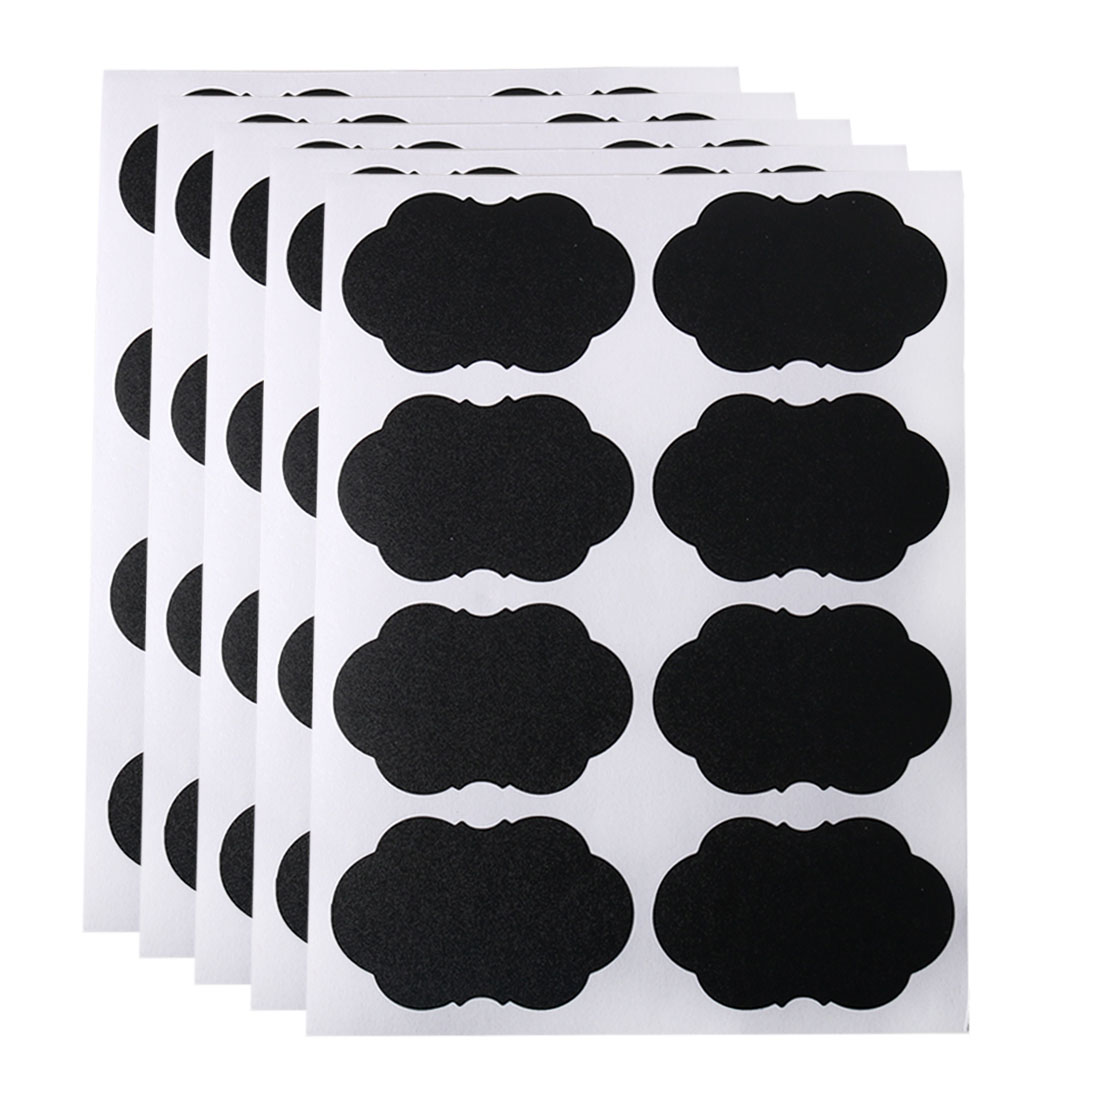 Unique Bargains 40pcs Chalkboard Labels Water-resistant Durable Blackboard Storage Stickers